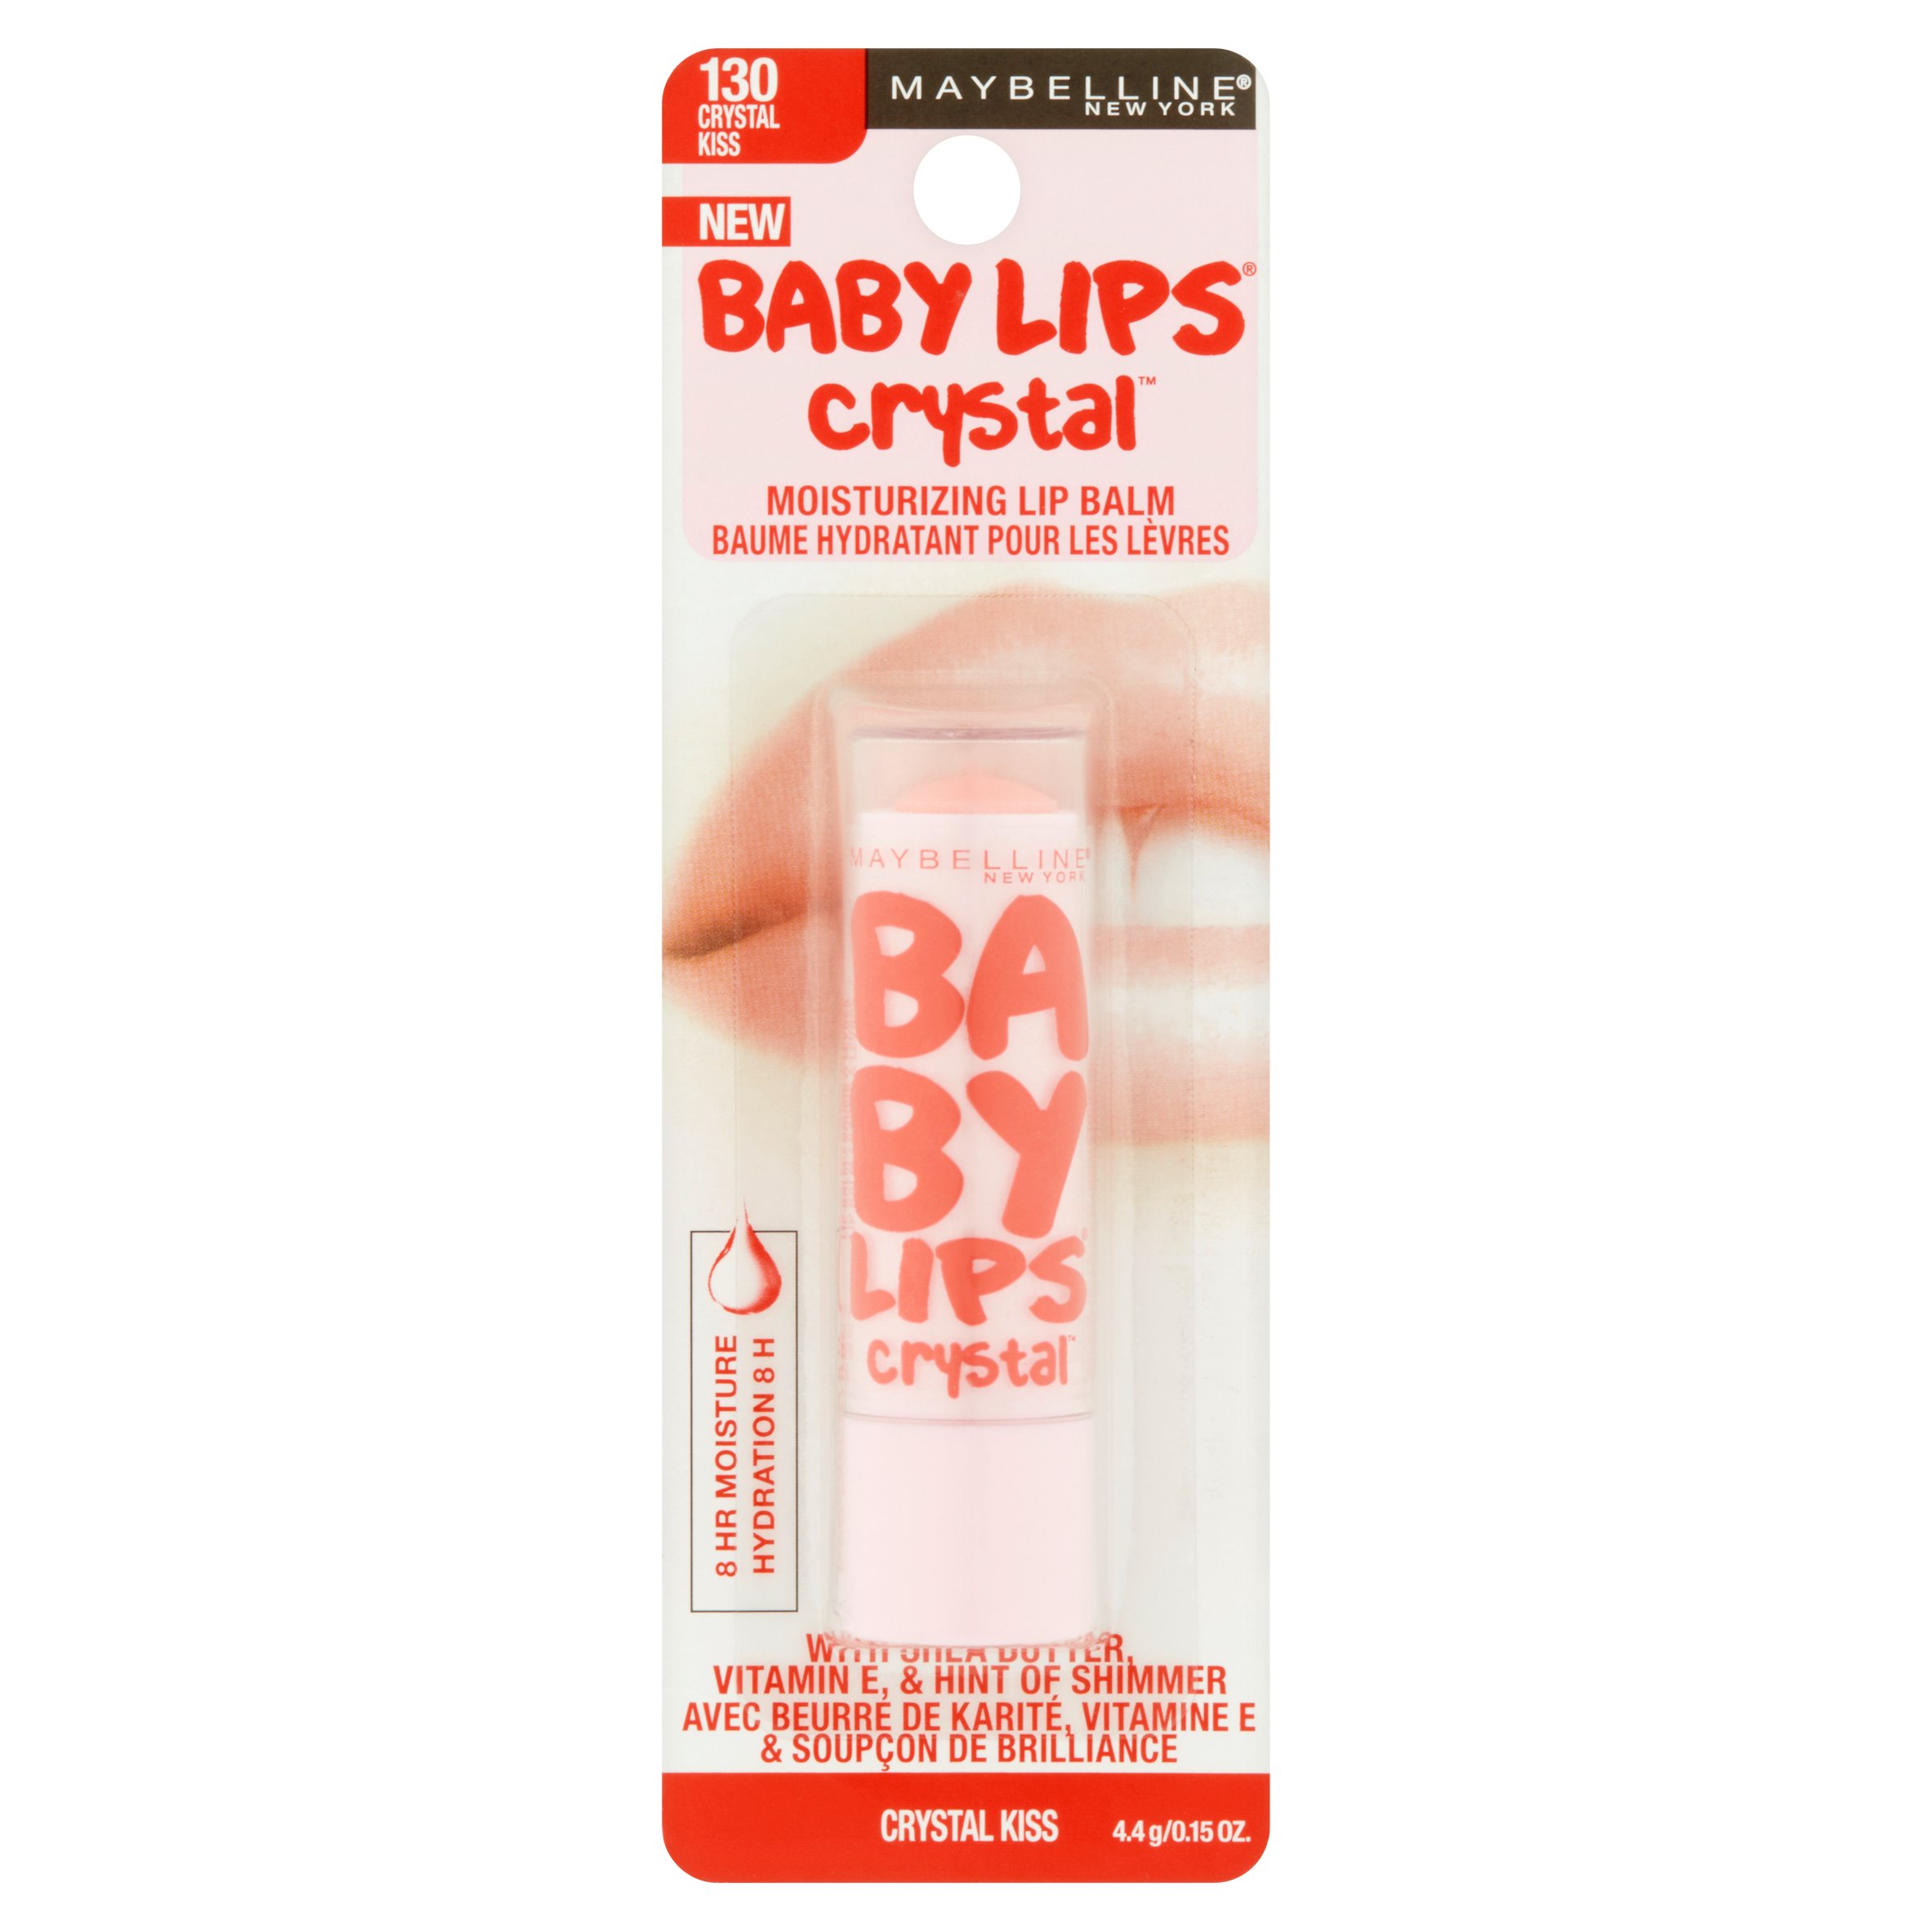 Maybelline Baby Lips Crystal Moisturizing Lip Balm - image 1 of 7